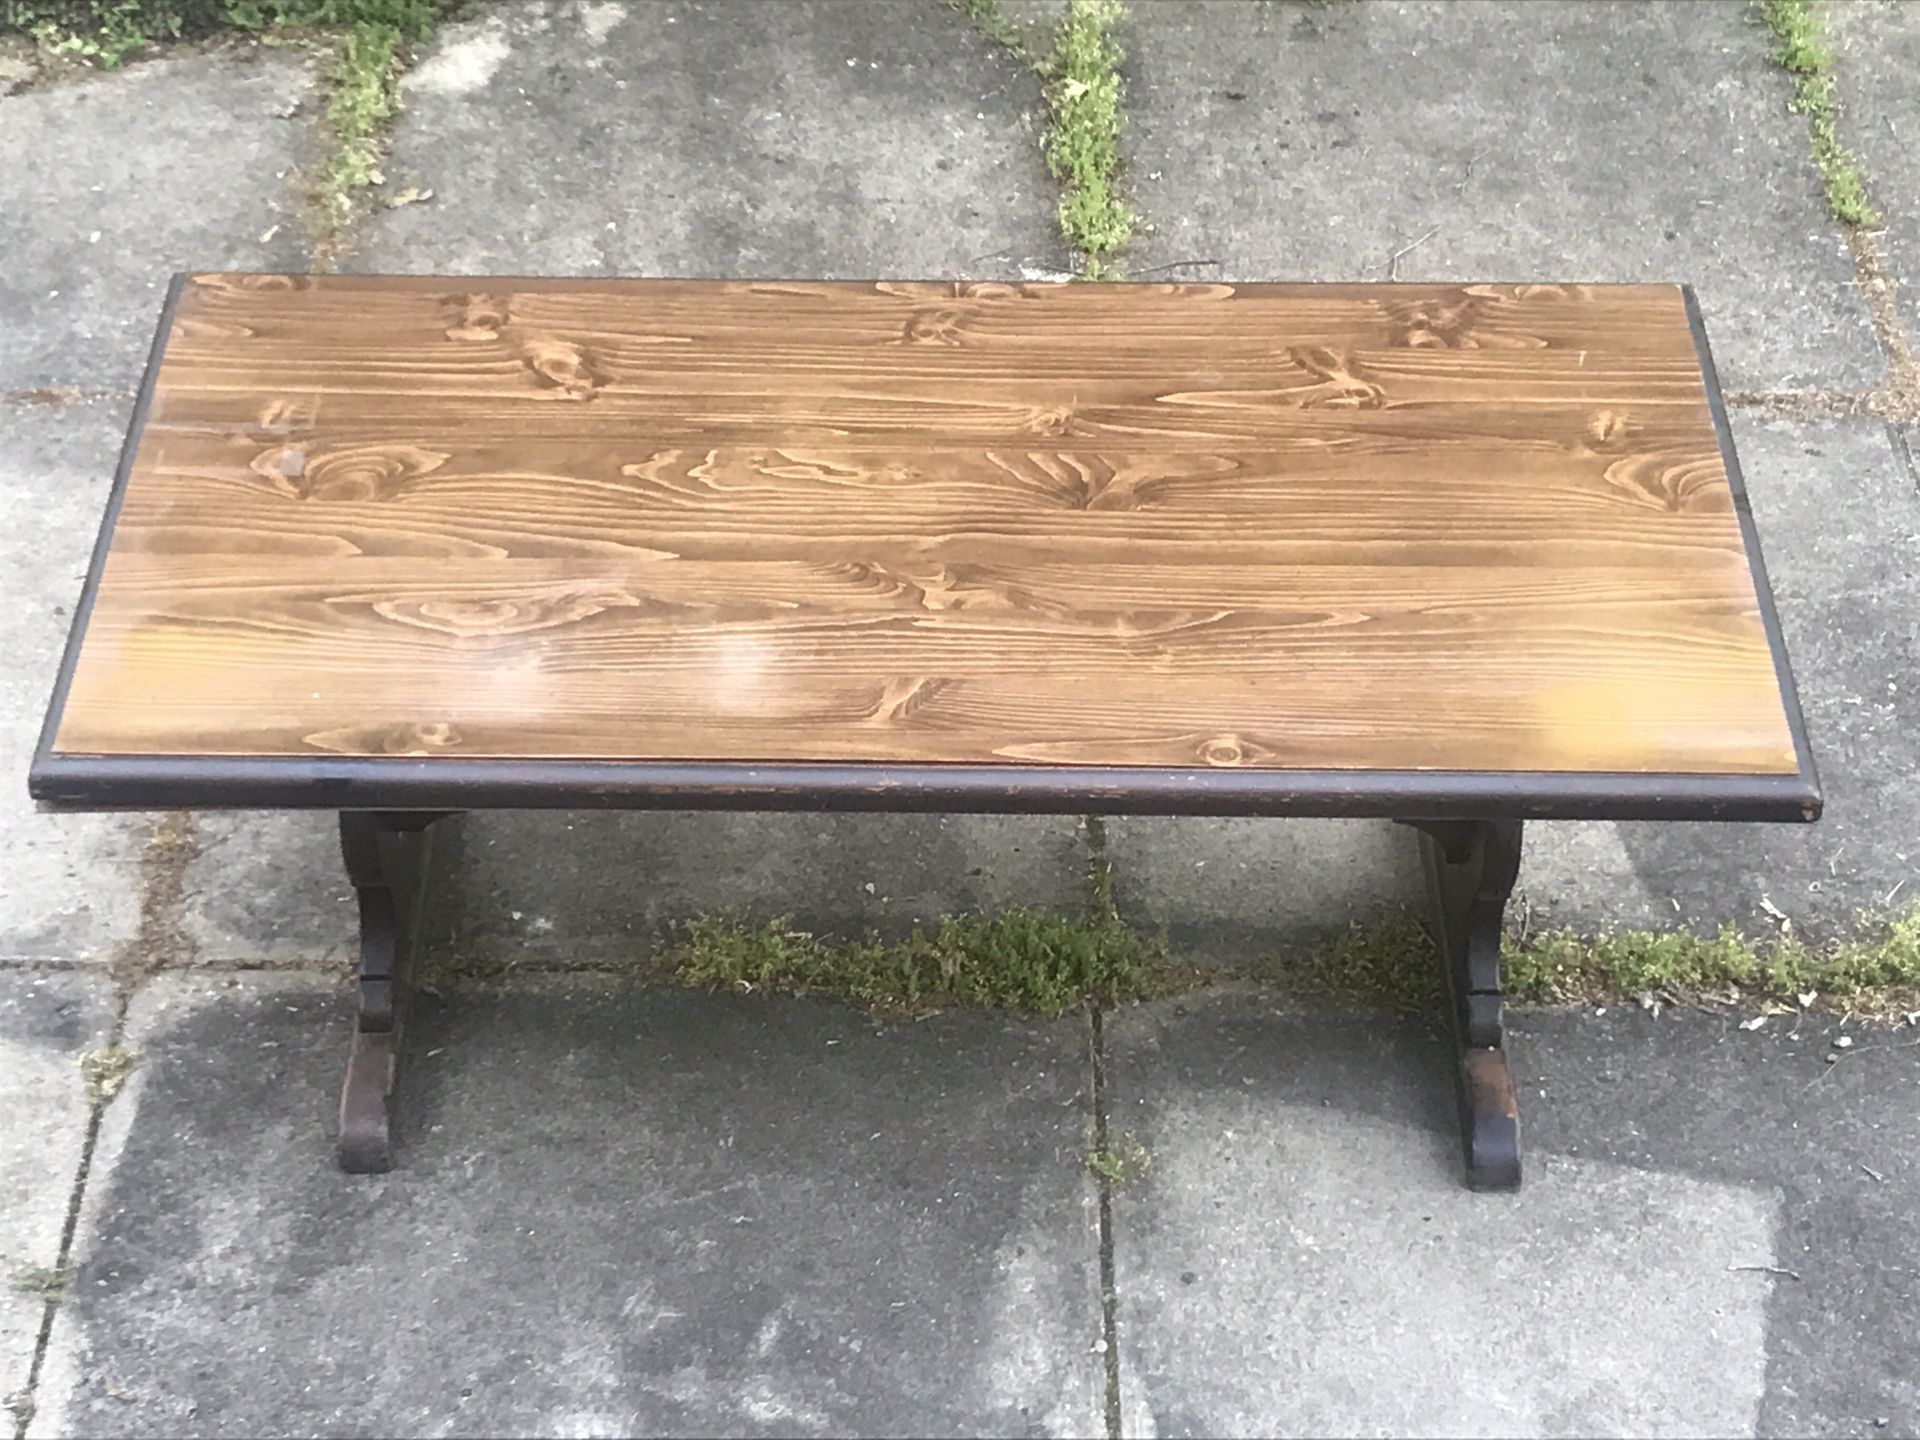 Trestle Dining Room Table, 76”x38”x30”, hardwood table w pine wood base, hardwood tabletop frame, & veneer top. Needs some work to enhance natural be